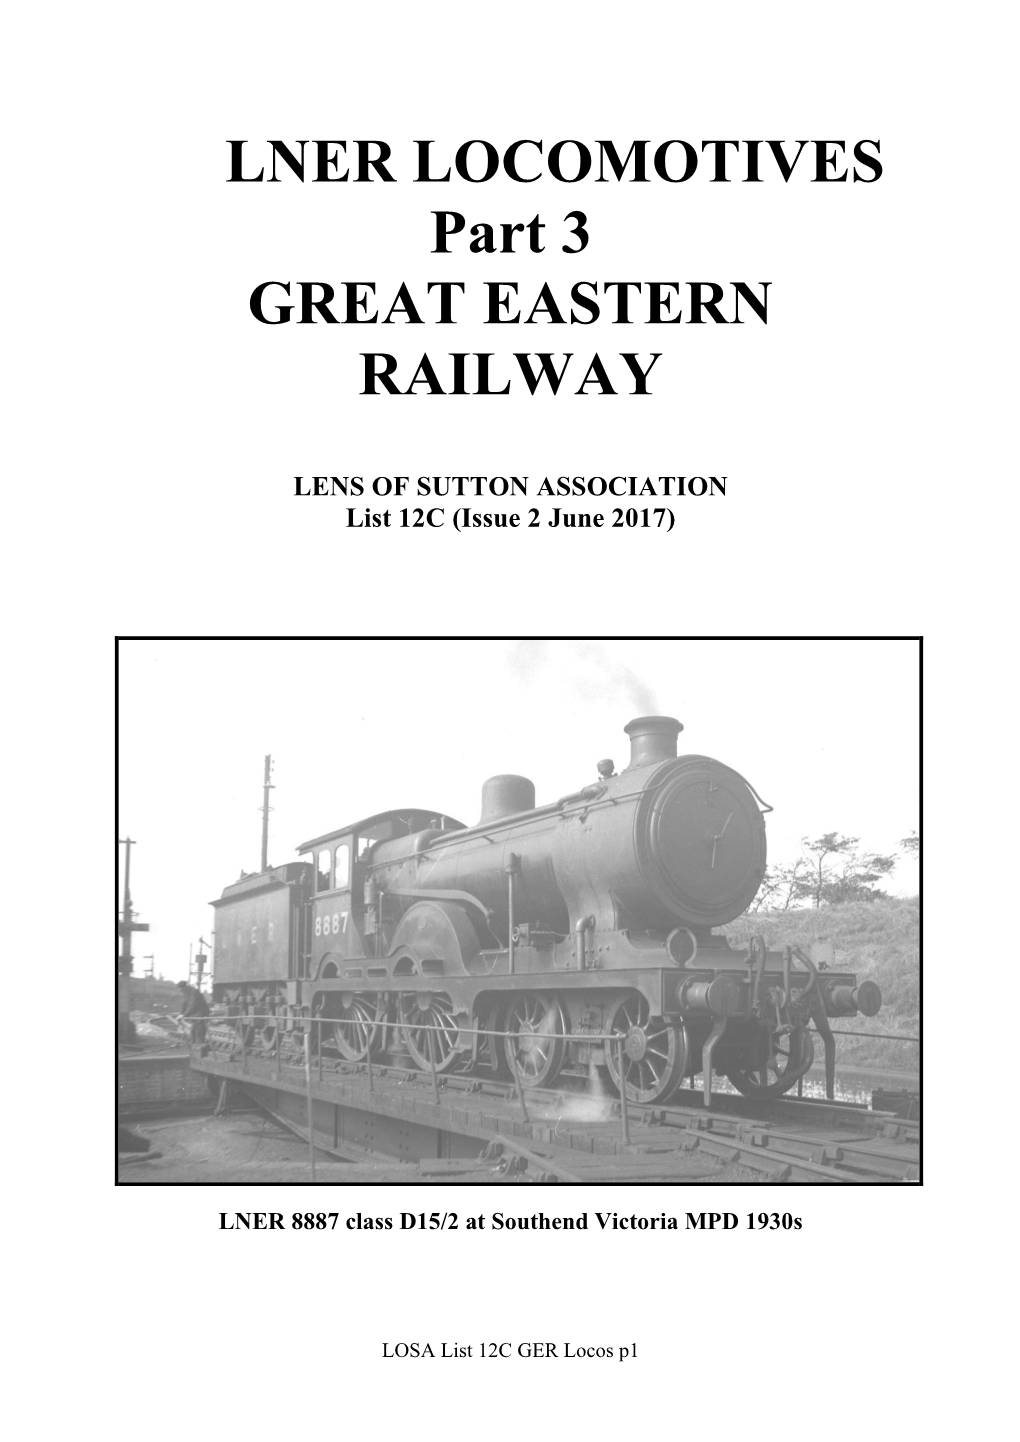 LNER LOCOMOTIVES Part 3 GREAT EASTERN RAILWAY